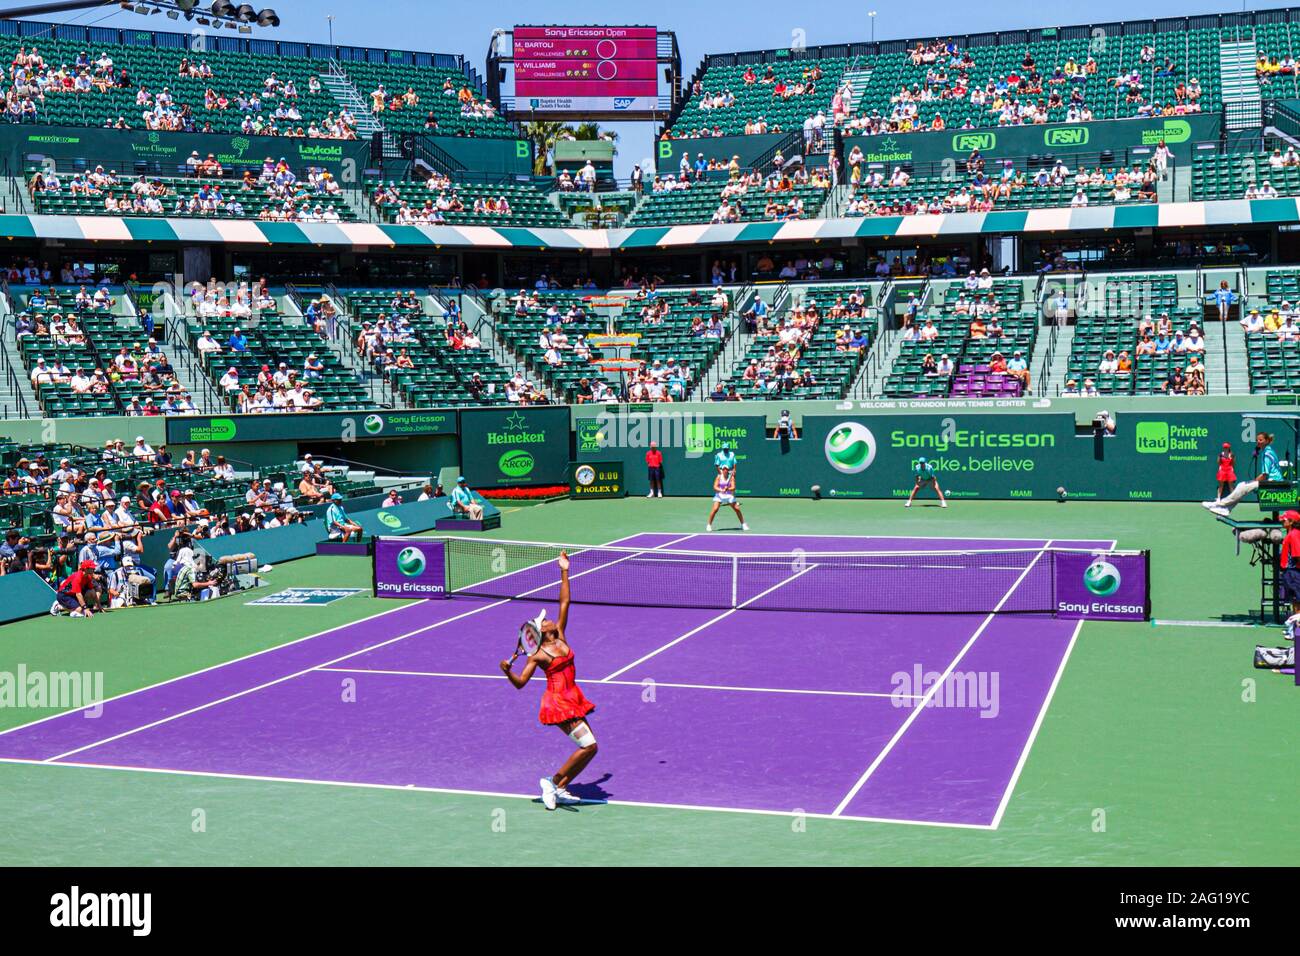 Miami Florida,Key Biscayne,Sony Ericsson OpenAL torneo di tennis,stadio sportivo,mezzo pieno vuoto,tifosi,Venus Williams,FL100405026 Foto Stock